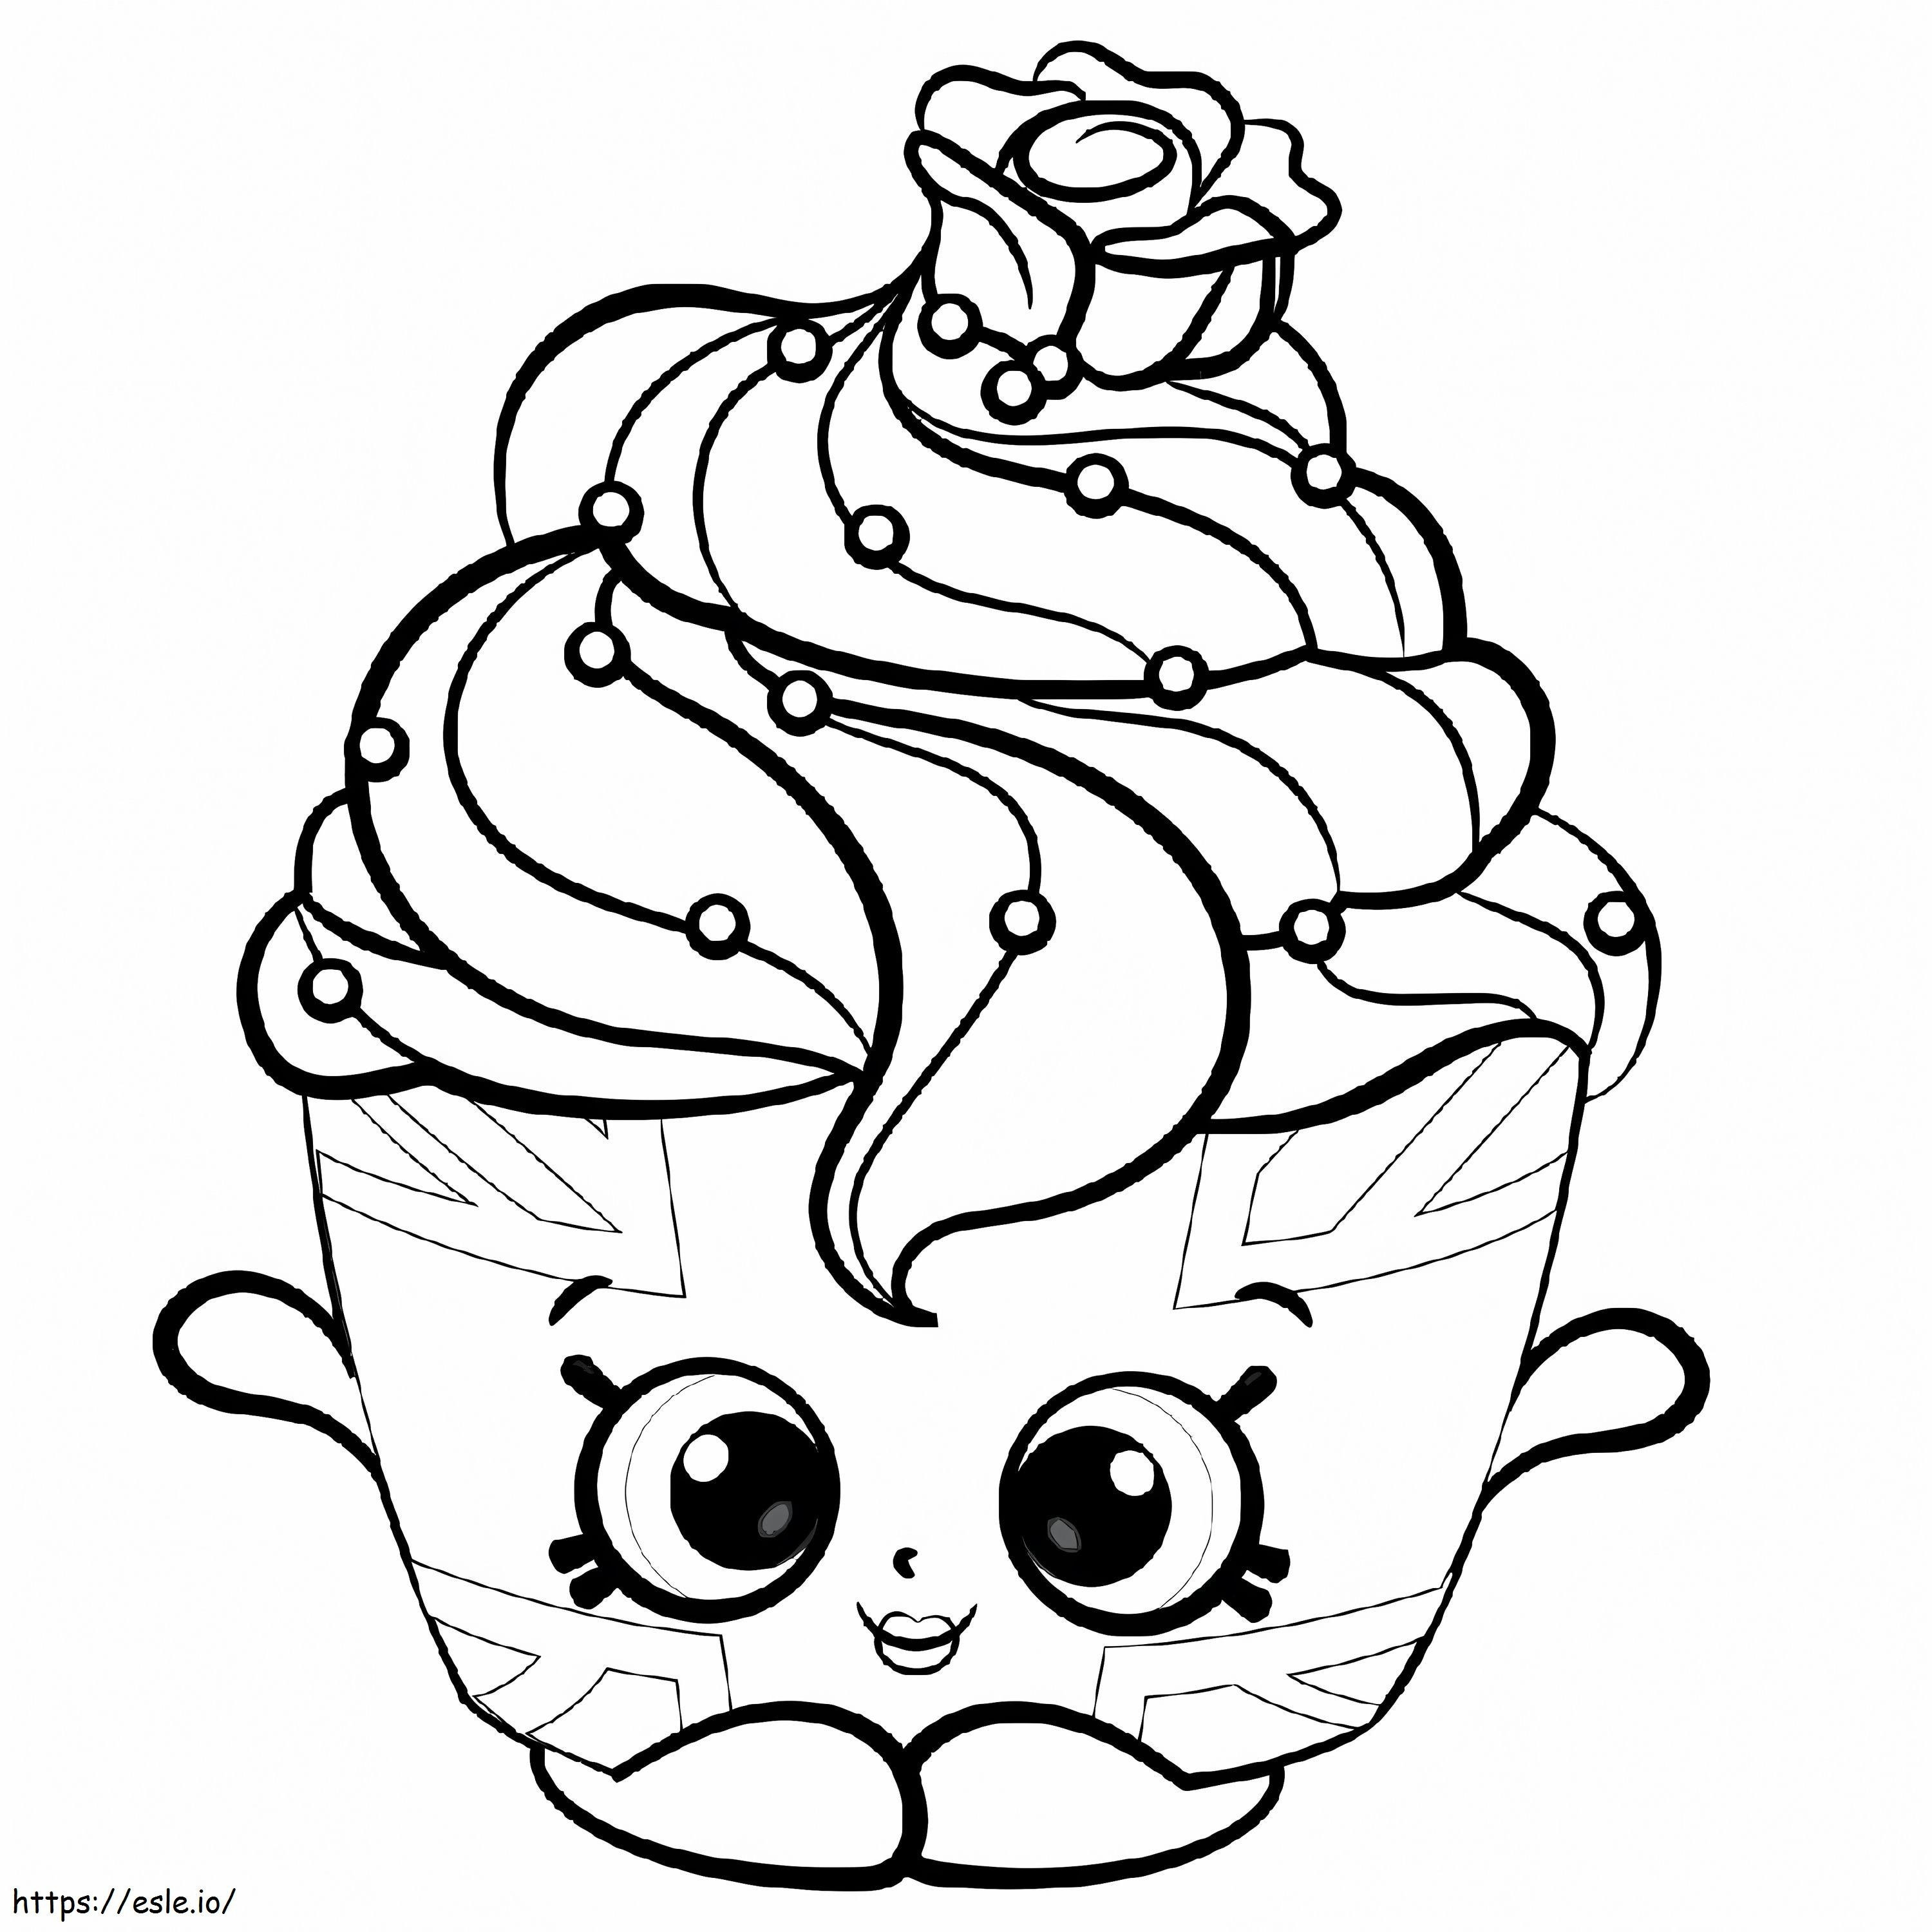 Isabella Ice Cream Shopkin coloring page